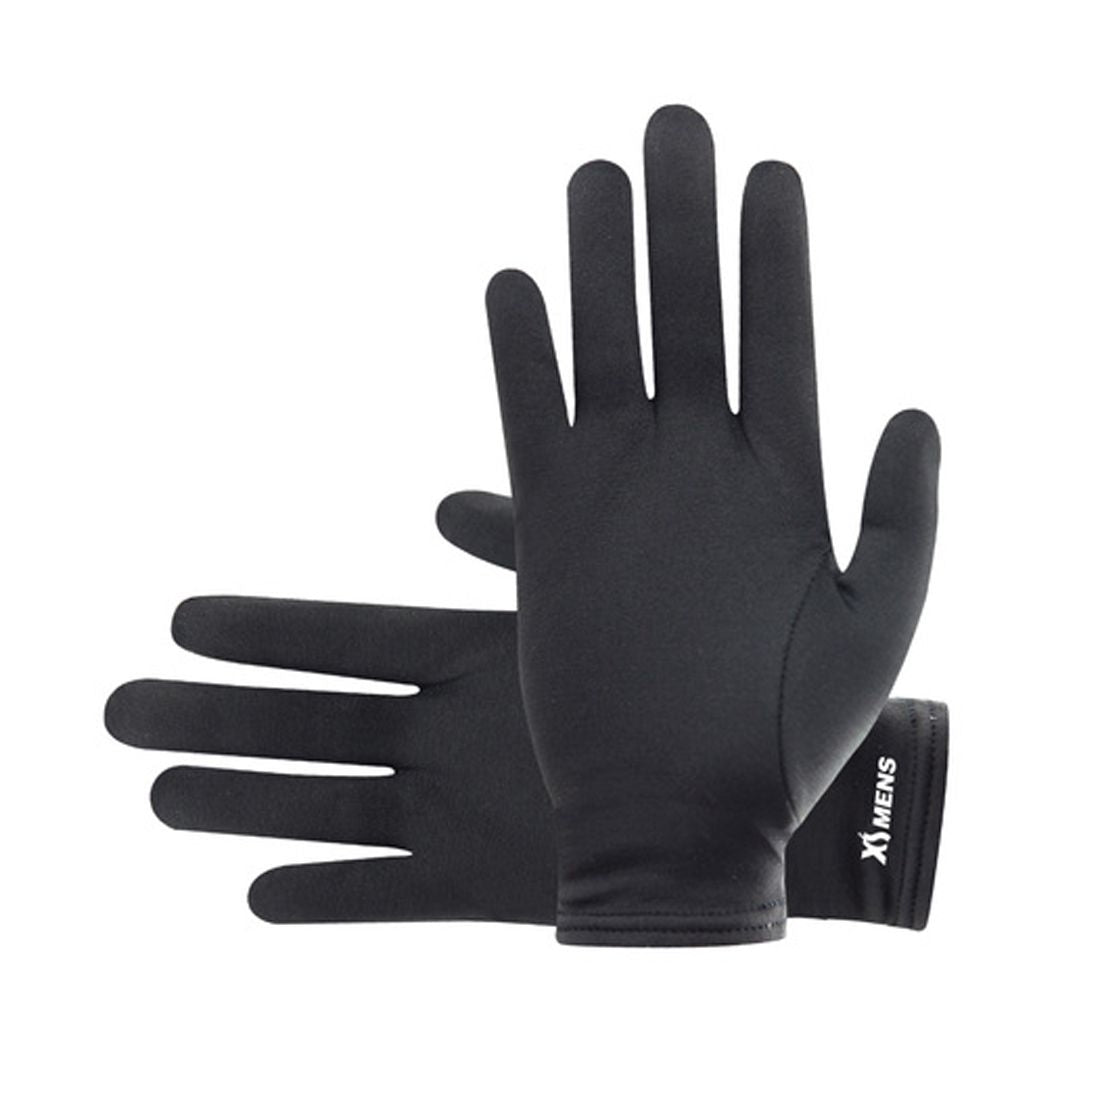 XS Scuba Lycra Glove Liner Slide Gloves on with Ease